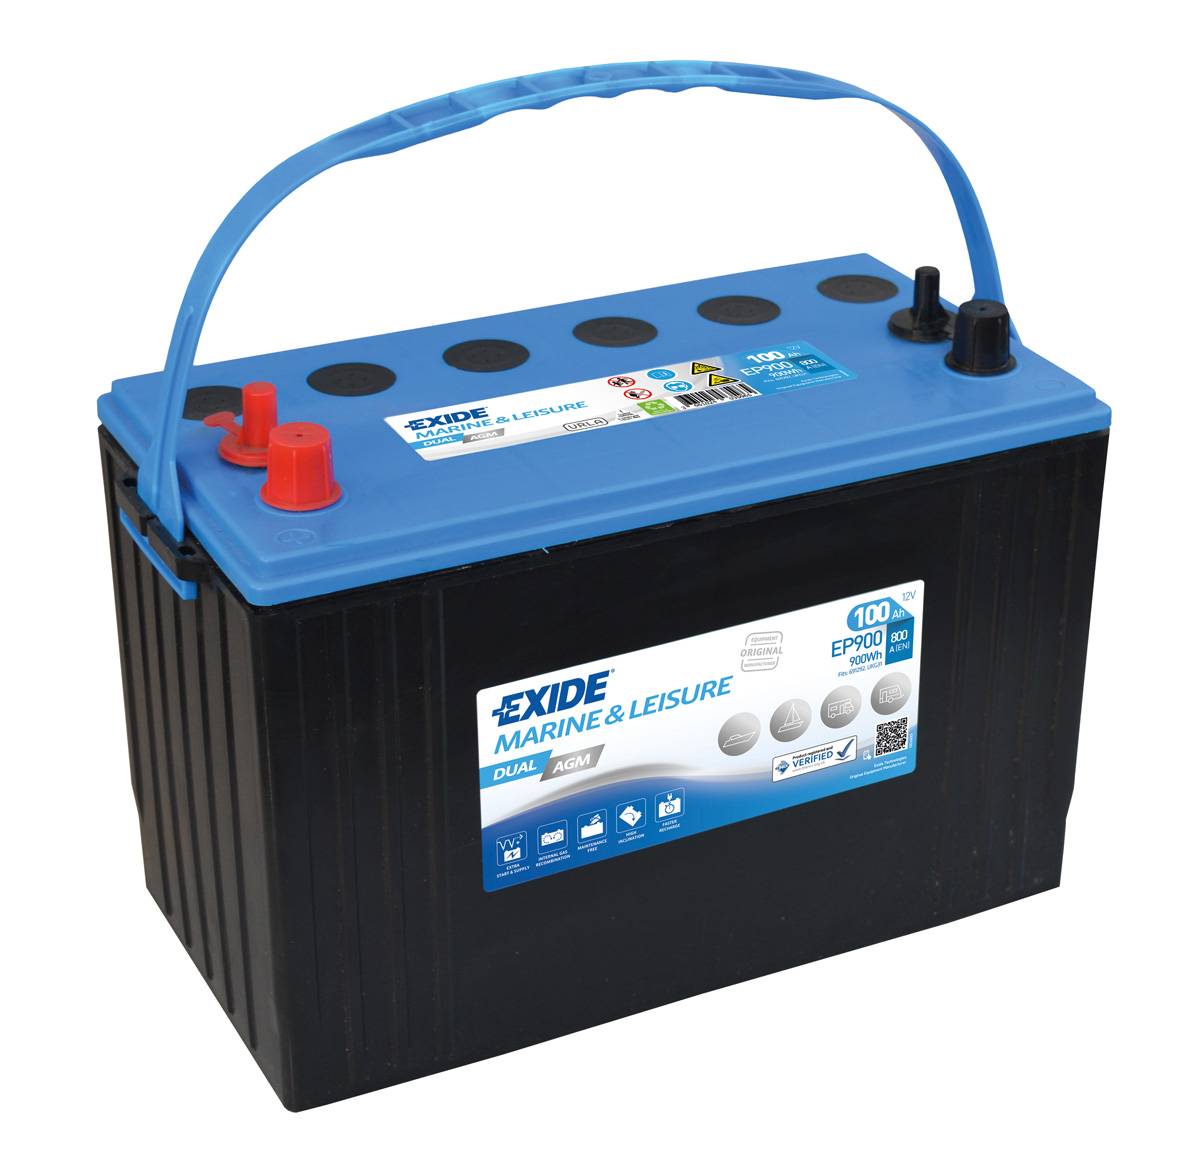 Exide EP900 Dual AGM Versorgungsbatterie Starterbatterie12V 100Ah 900Wh